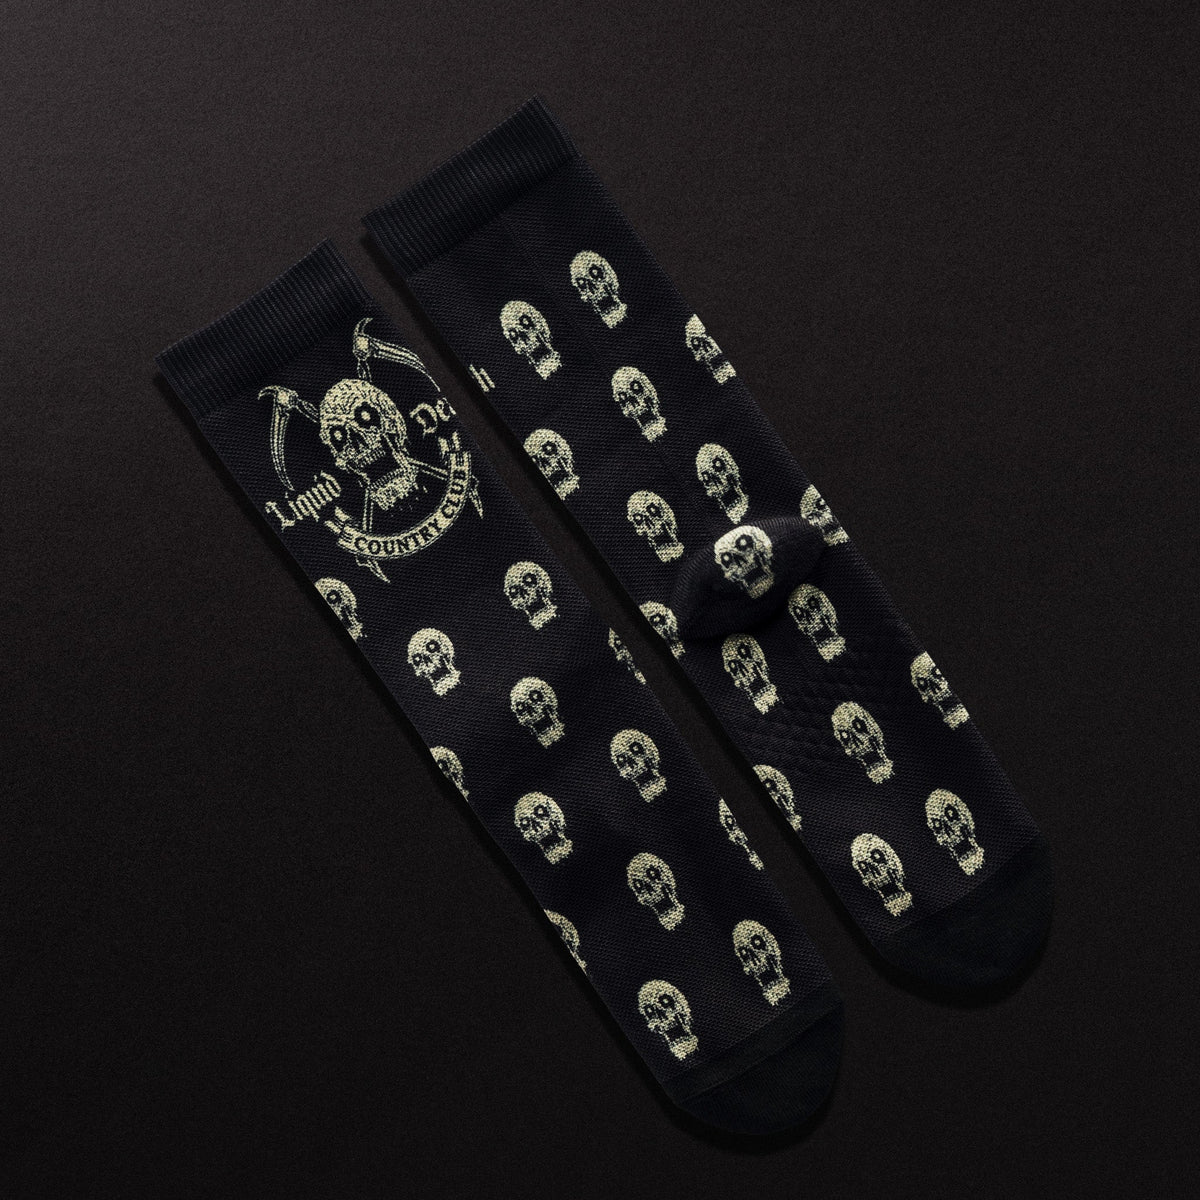 Exclusive Death Sock